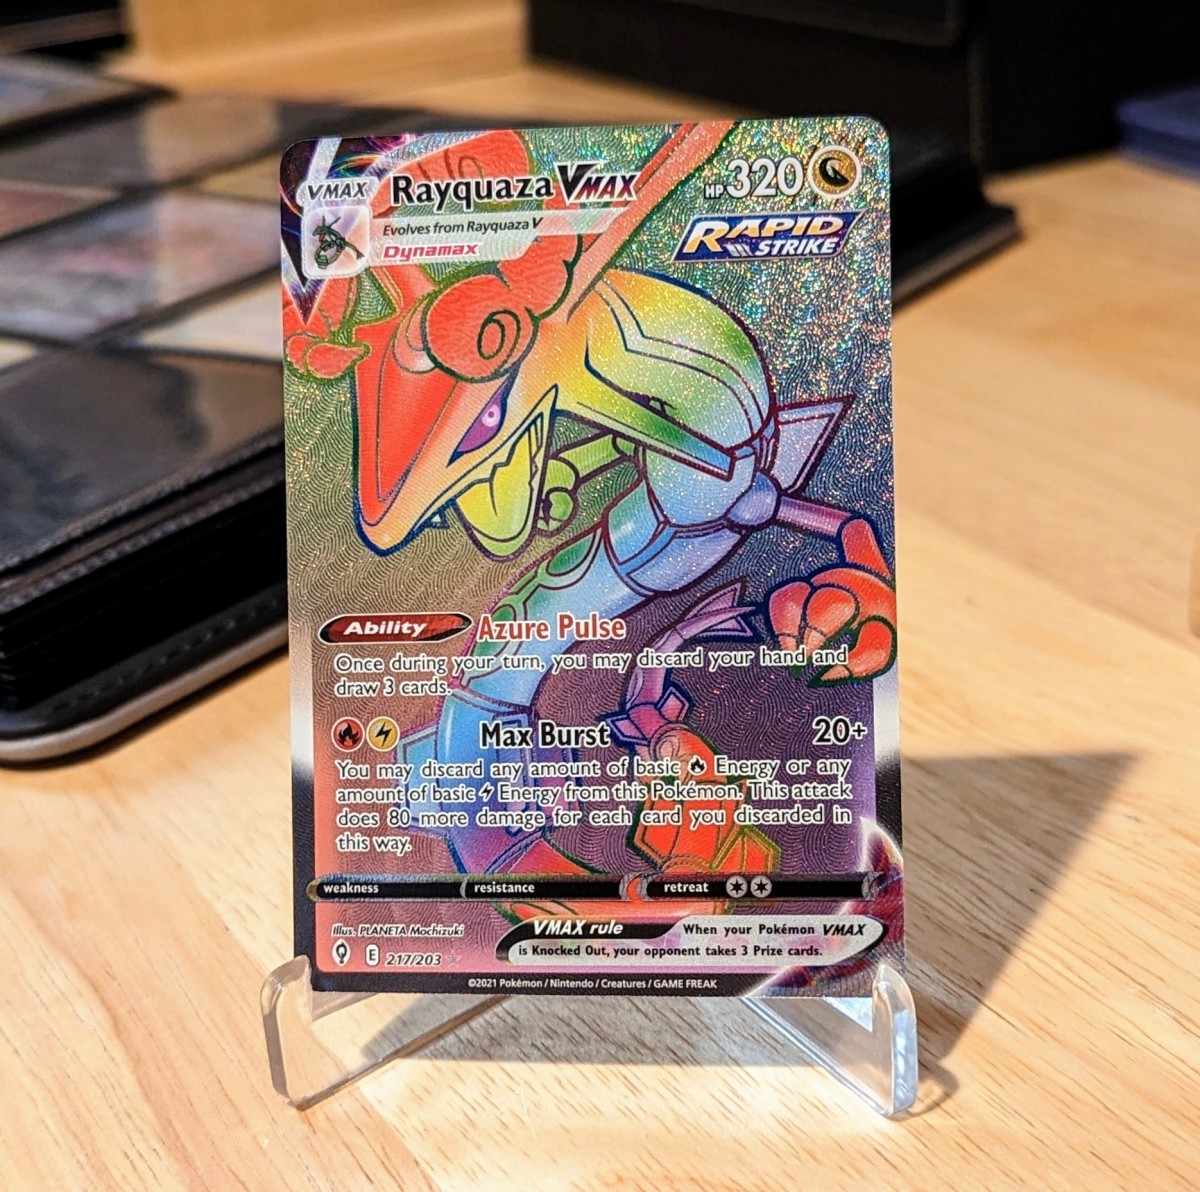 Rayquaza VMAX Rainbow Secret Rare Pokémon Card - Evolving Skies - 217/203 - Value: $35